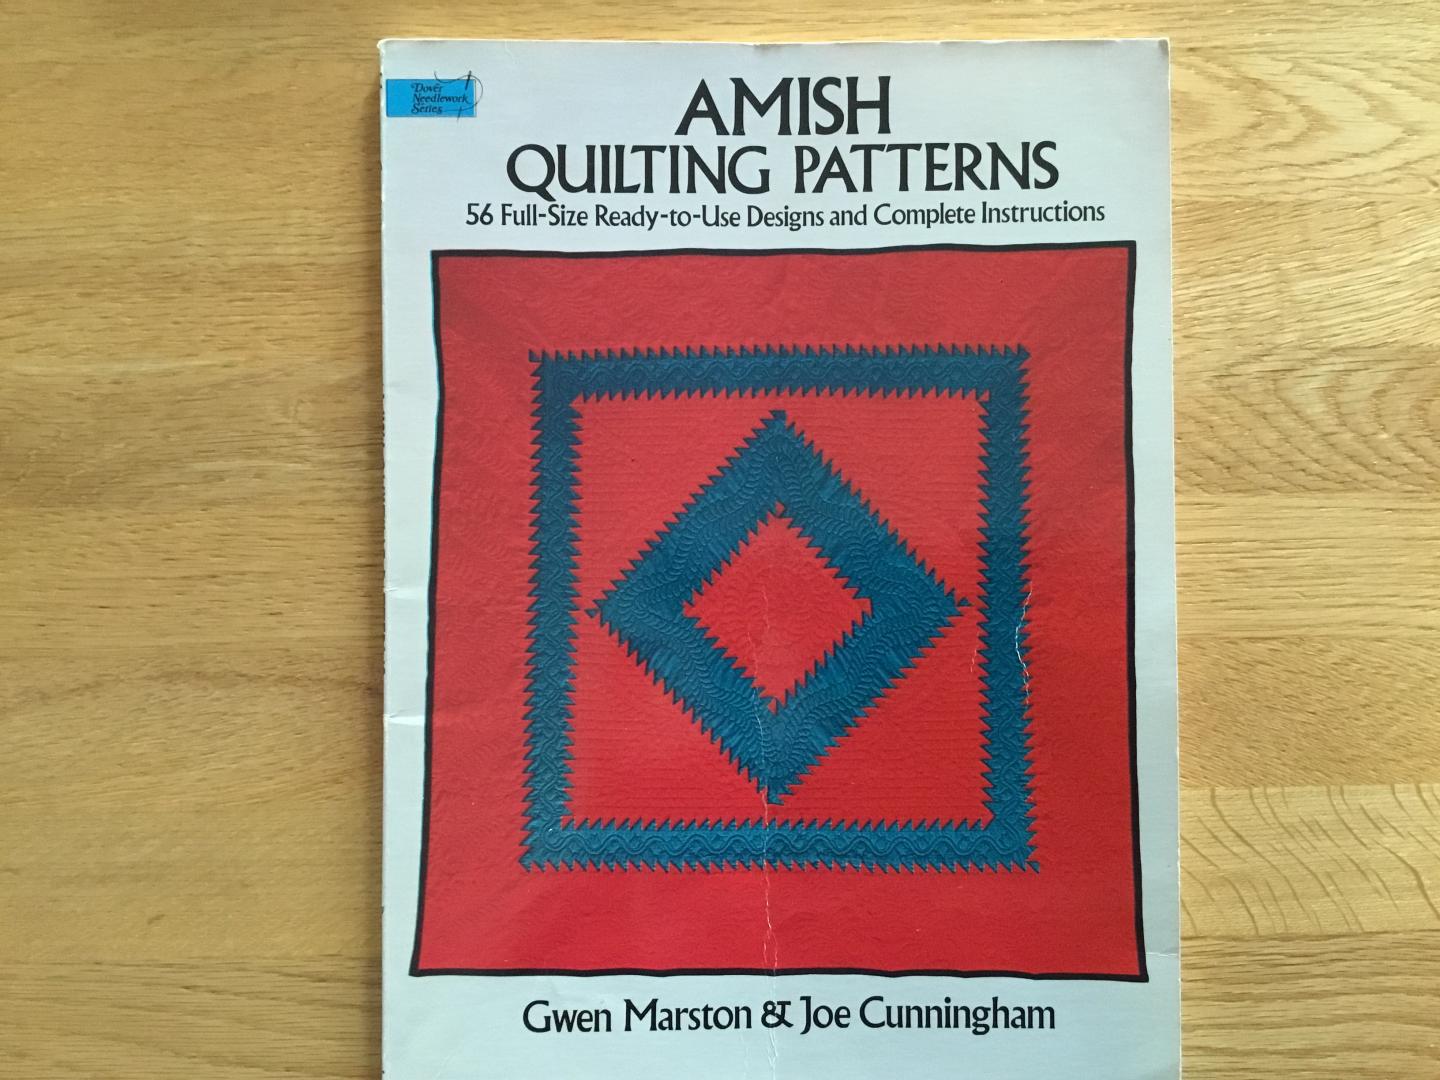 Marston Gwen &Cunningham Joe - Amish quitting patterns